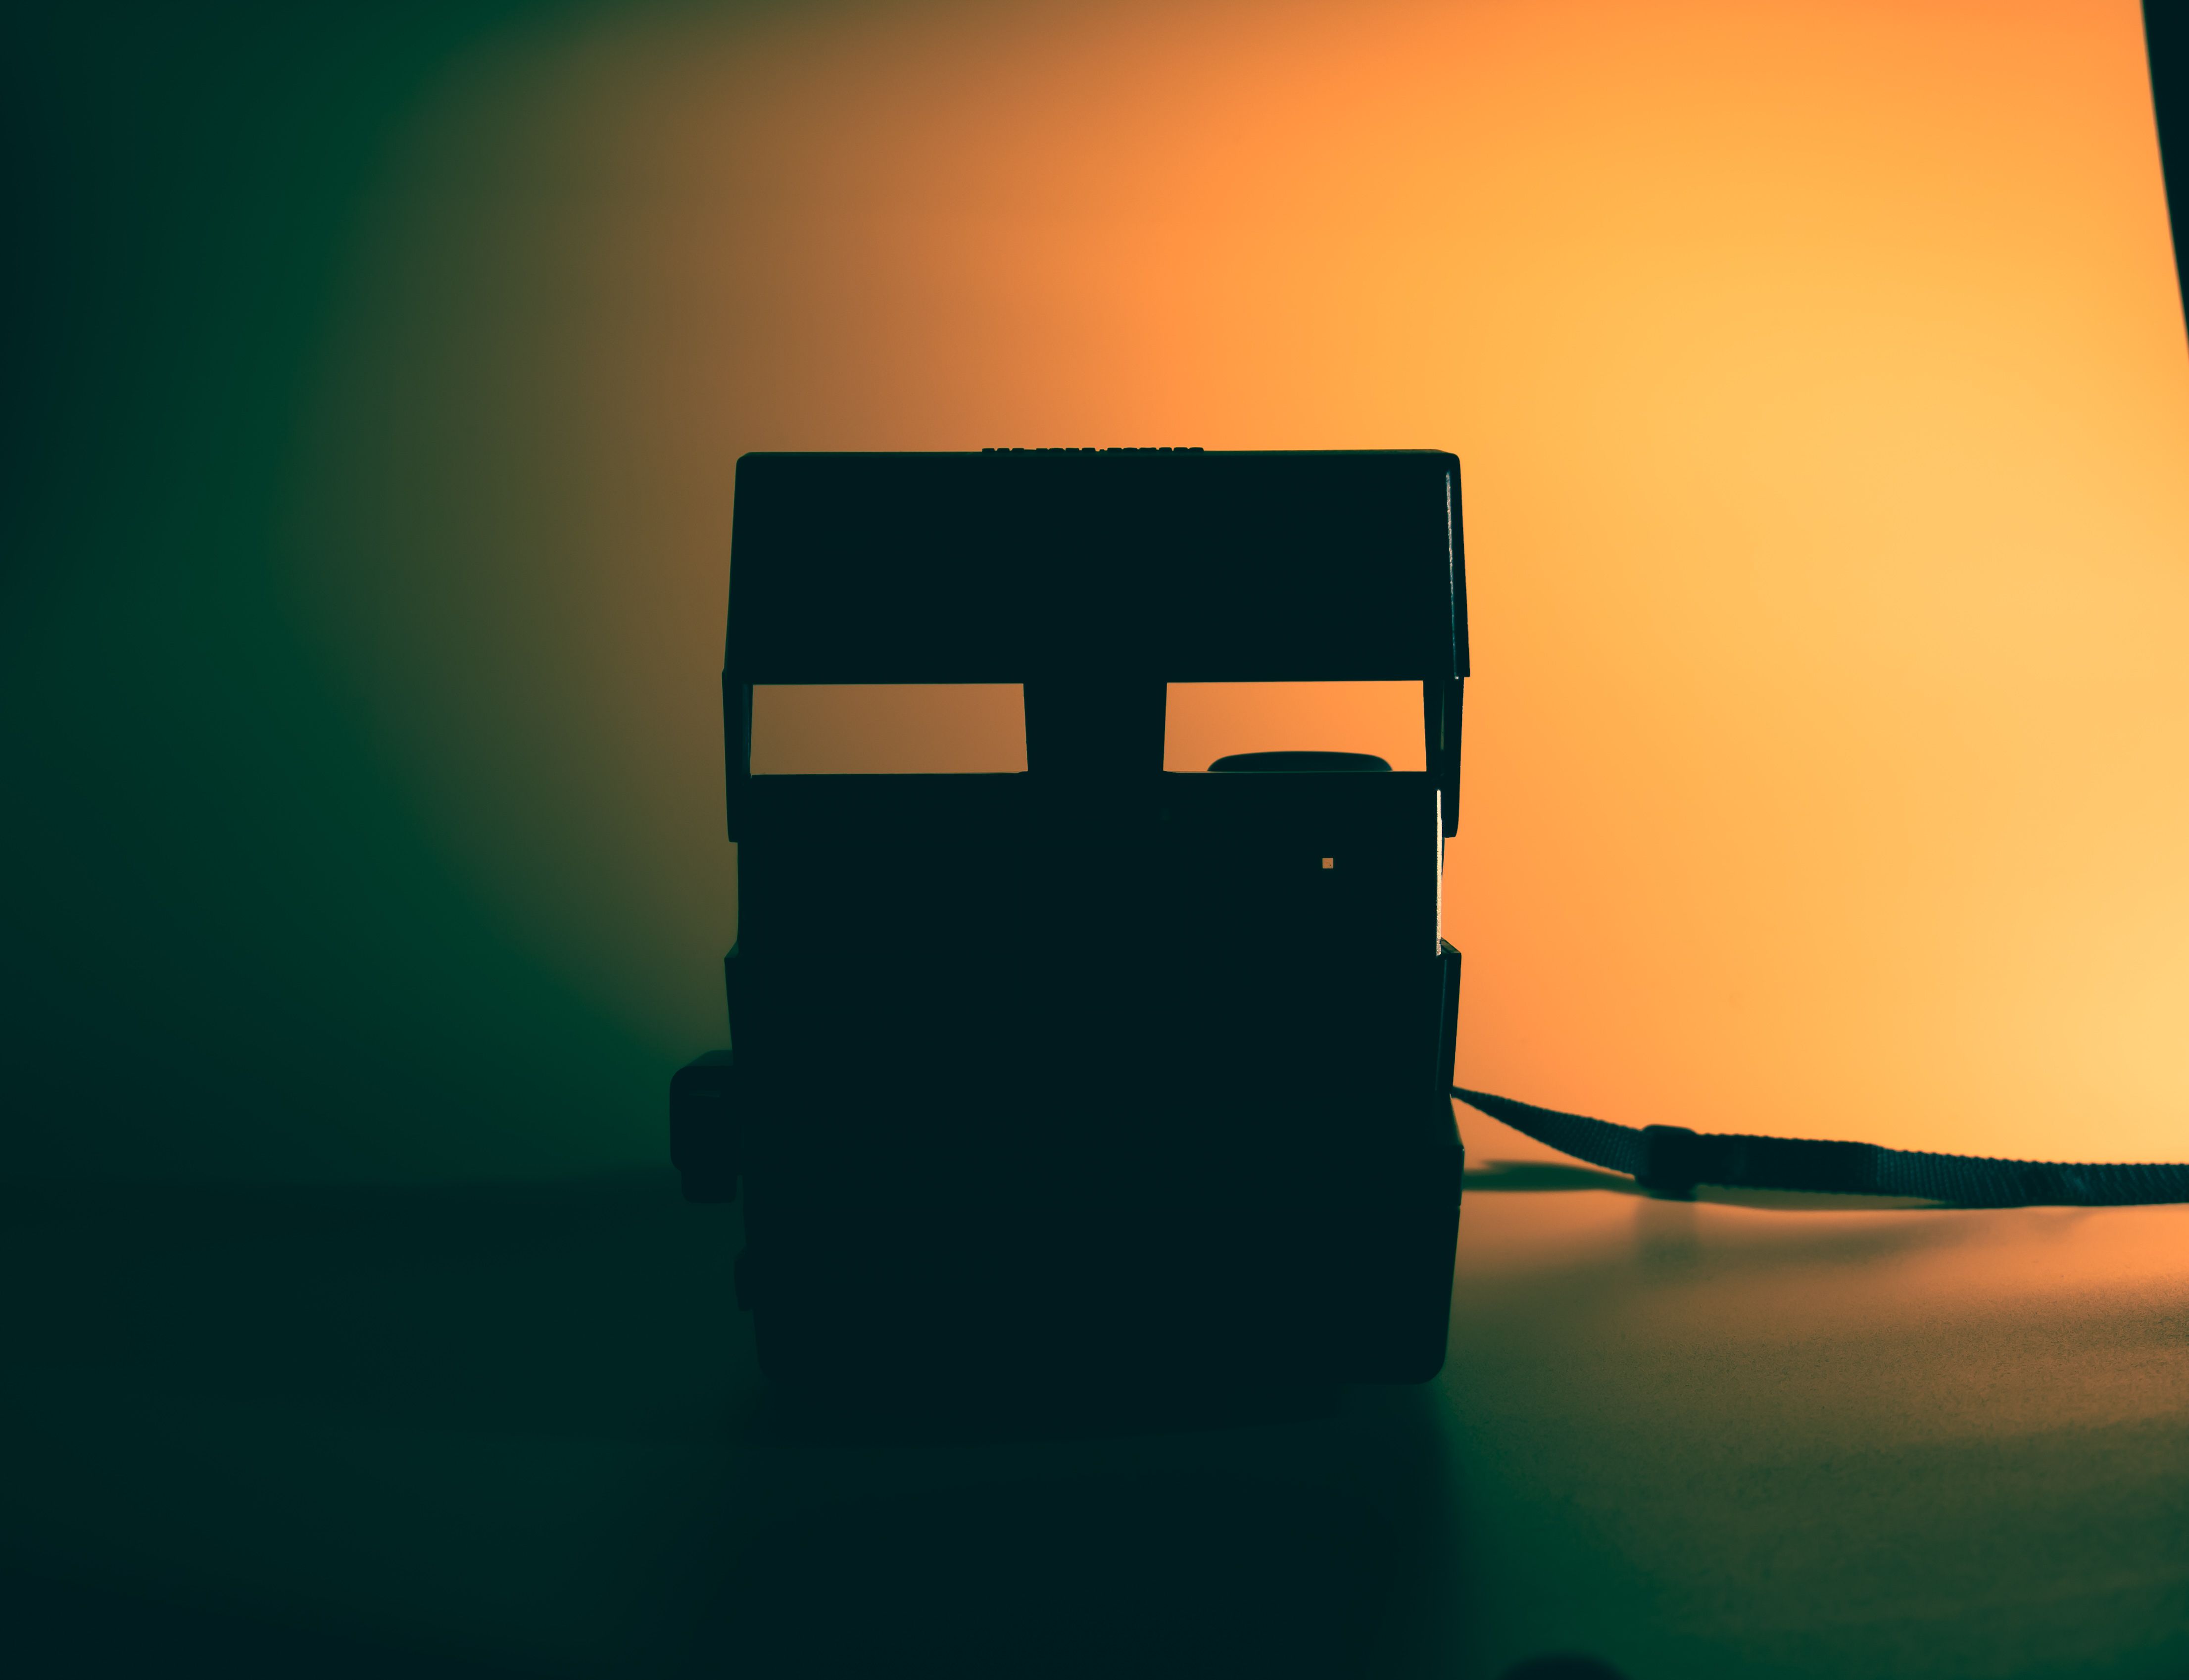 Polaroid se lanza al mercado de las impresoras 3D